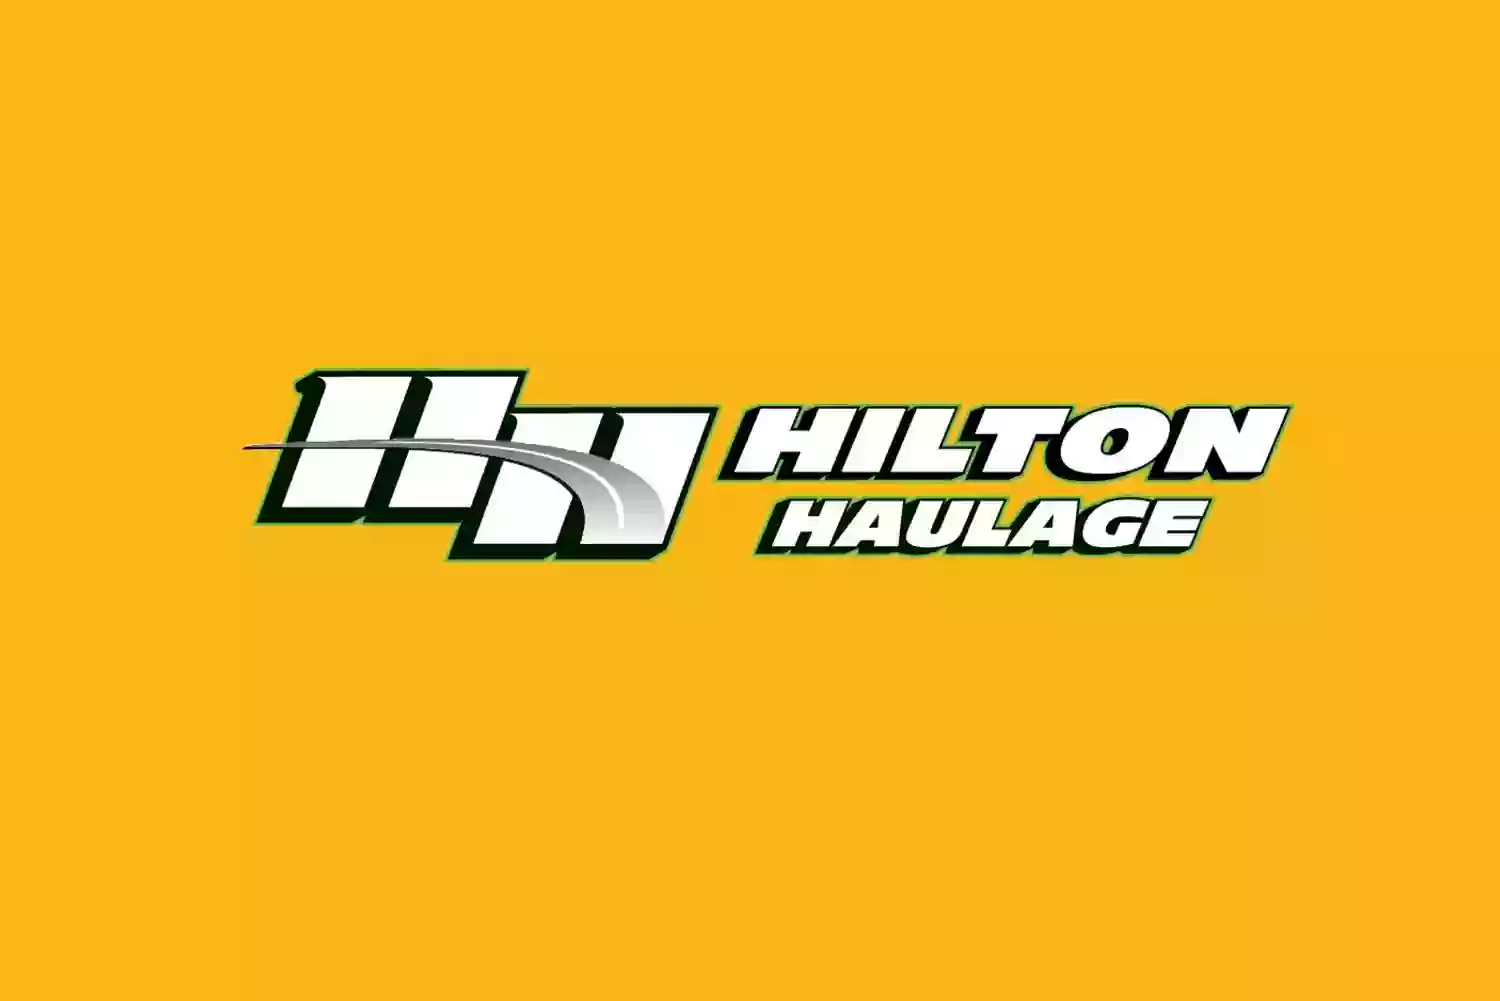 Hilton Haulage Transport